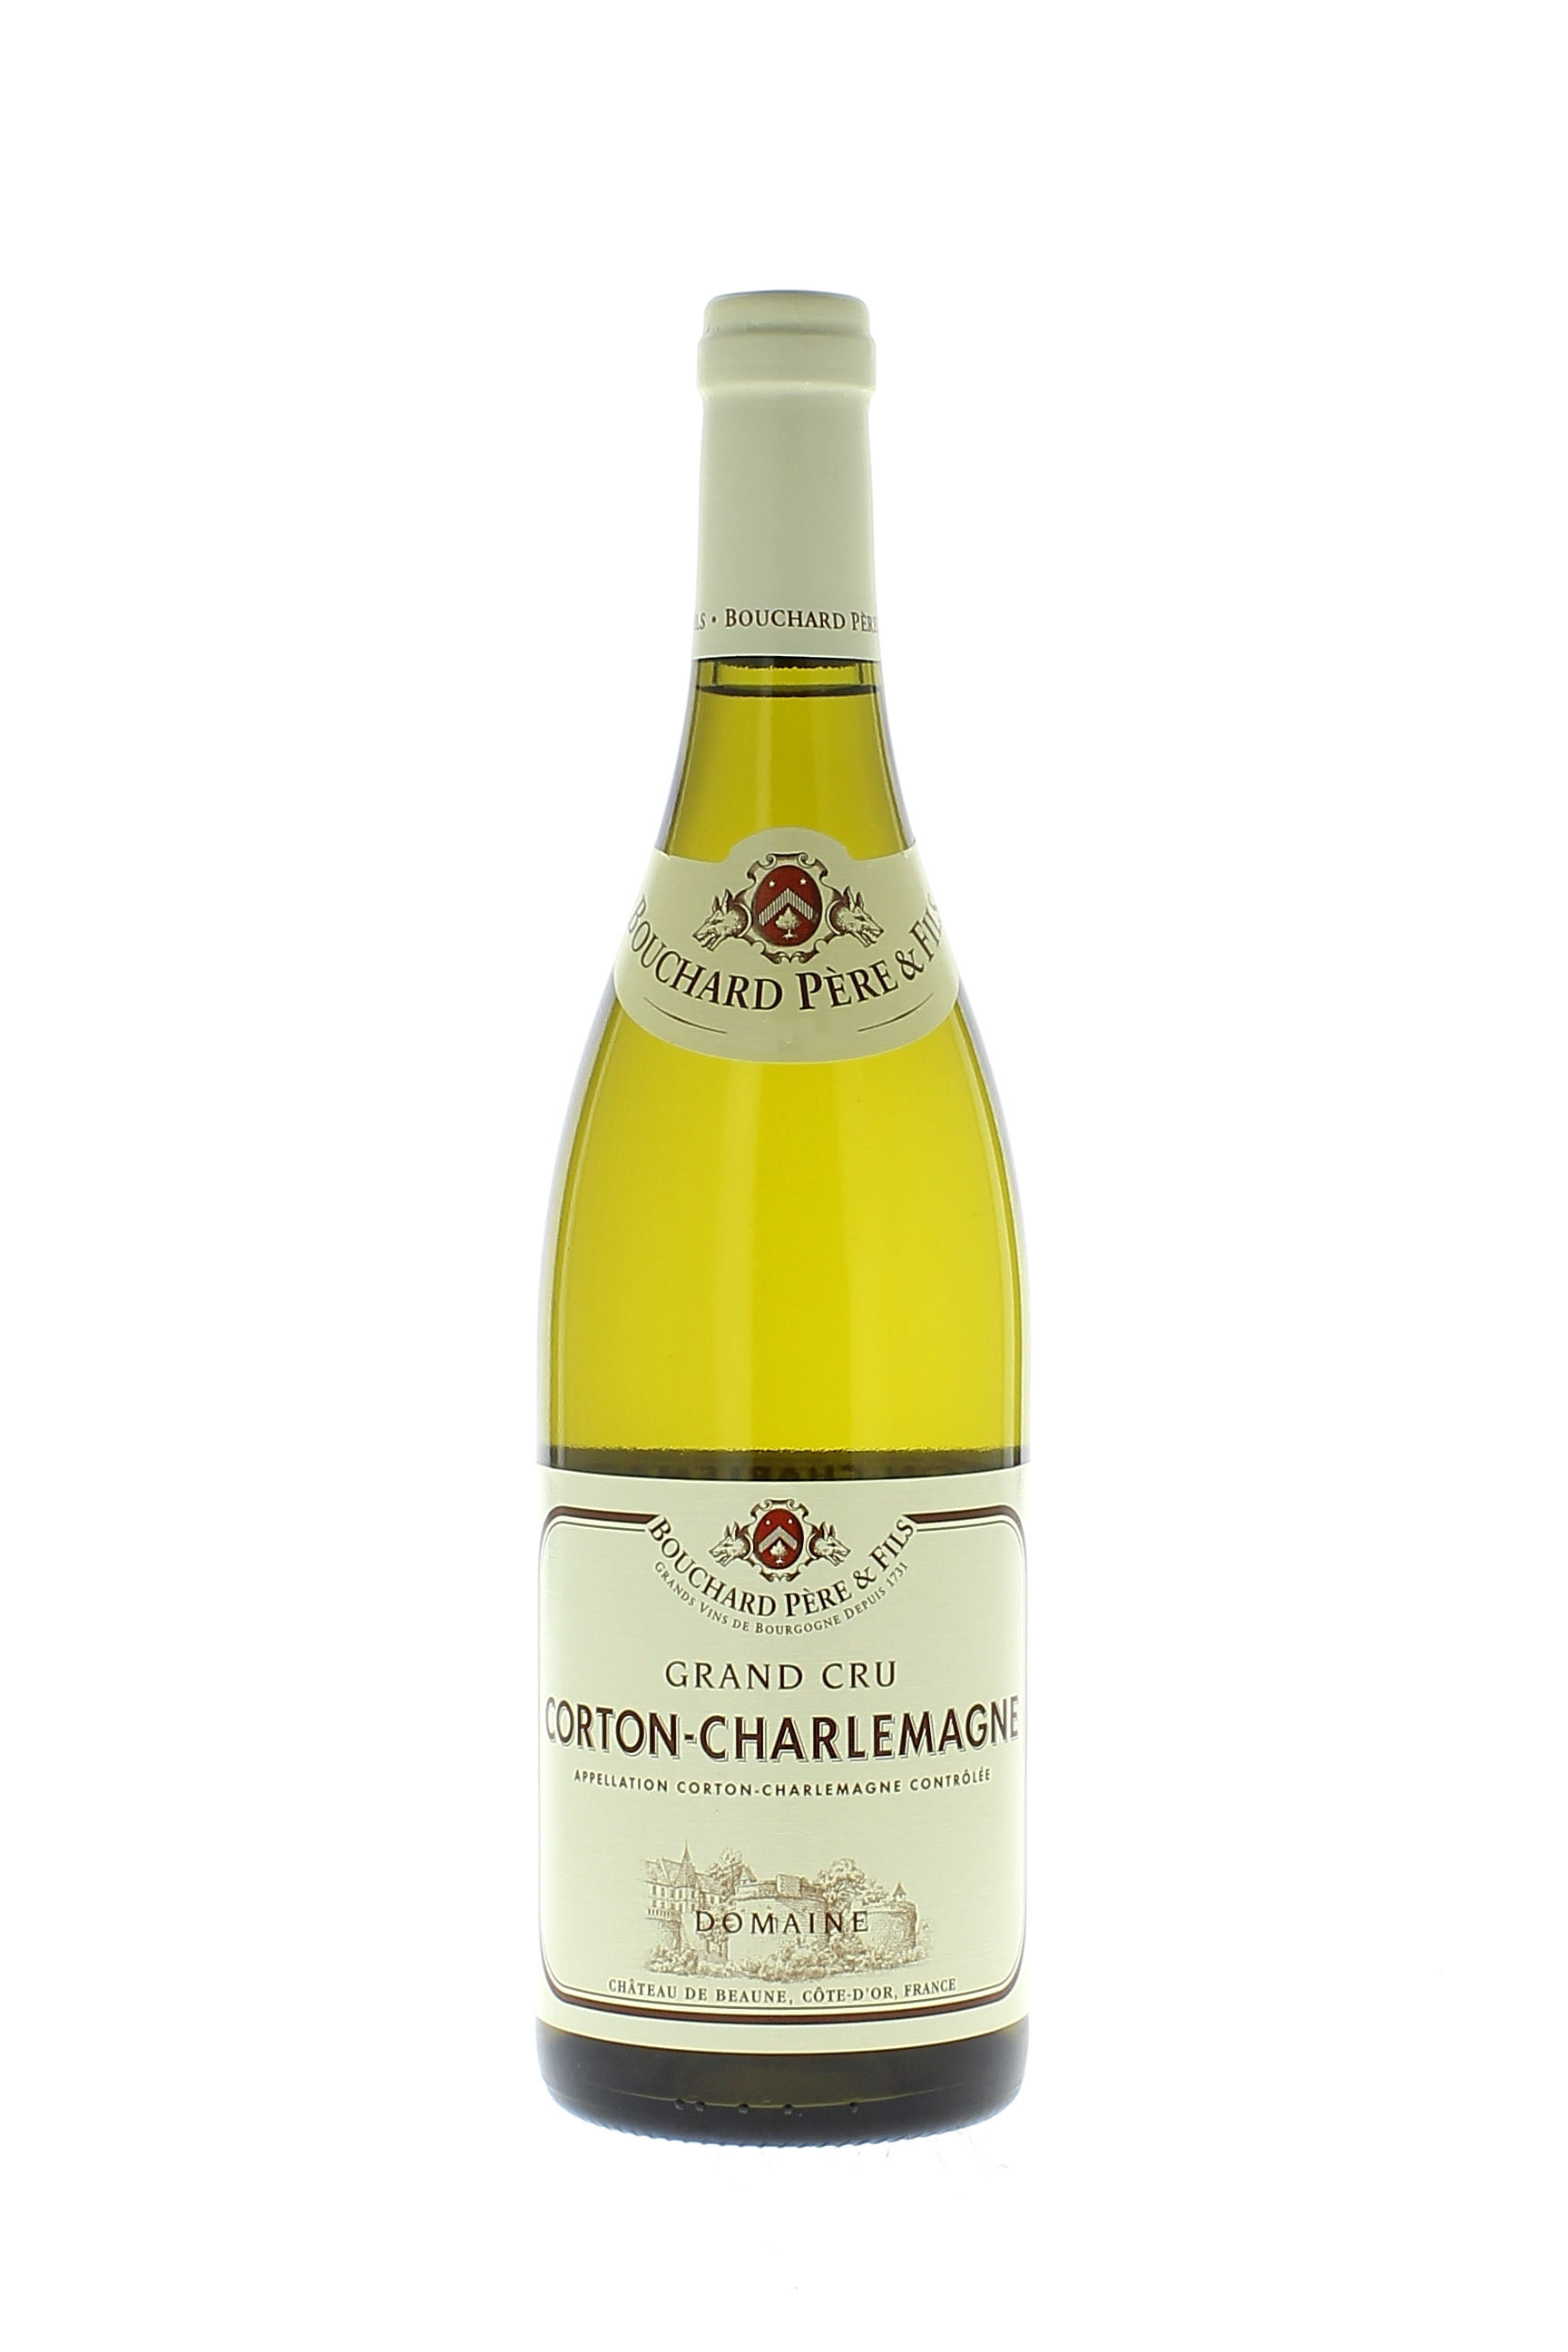 Corton charlemagne grand cru 2006  BOUCHARD Pre et fils, Bourgogne blanc